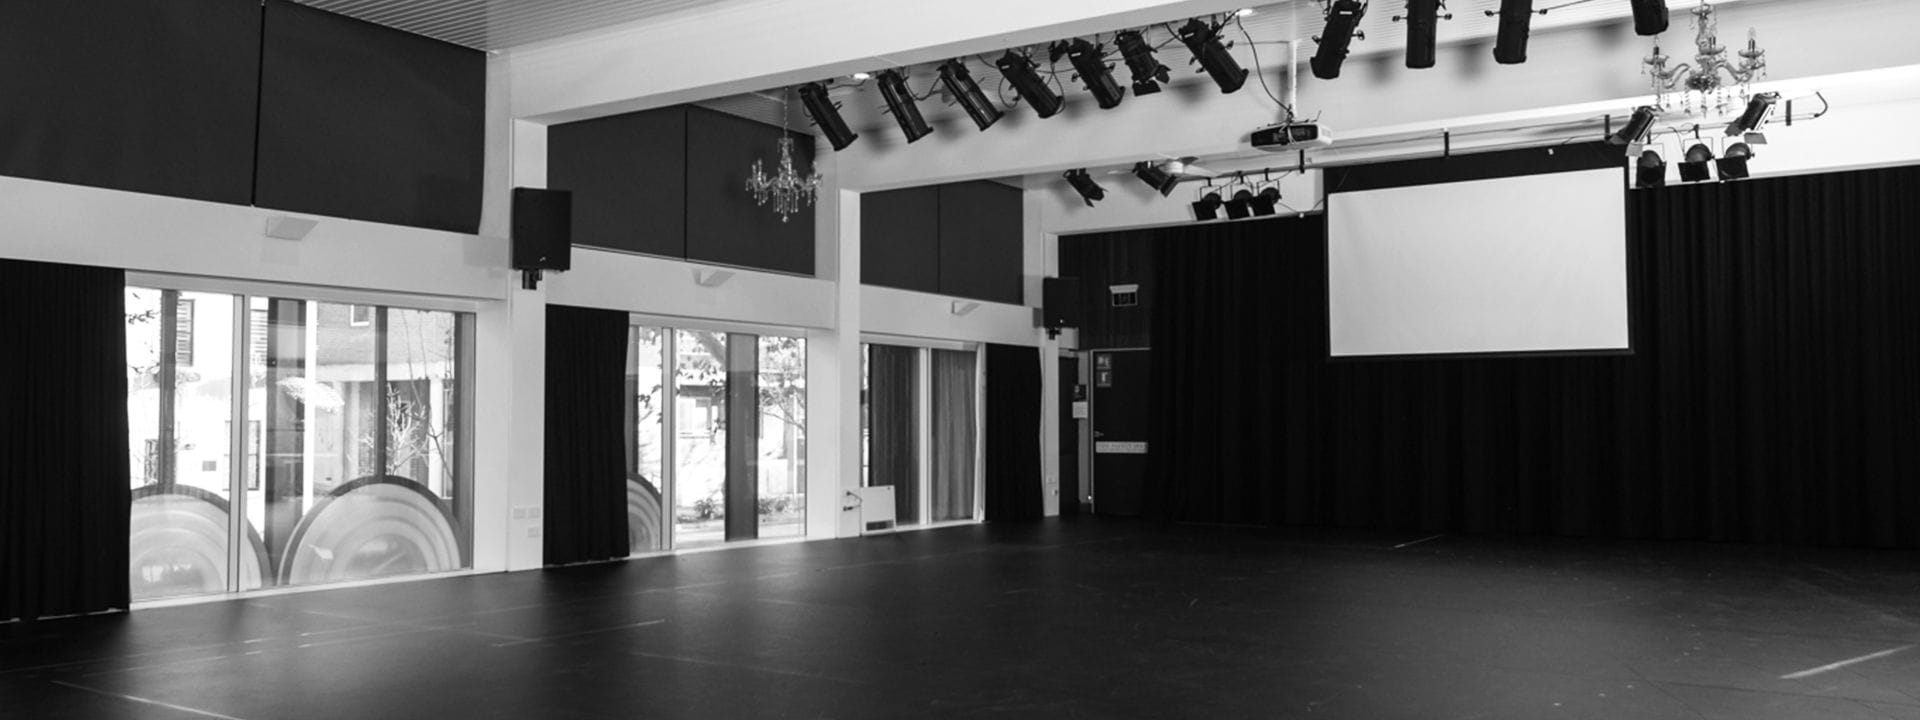 ESCAC Rehearsal Space - Darlinghurst